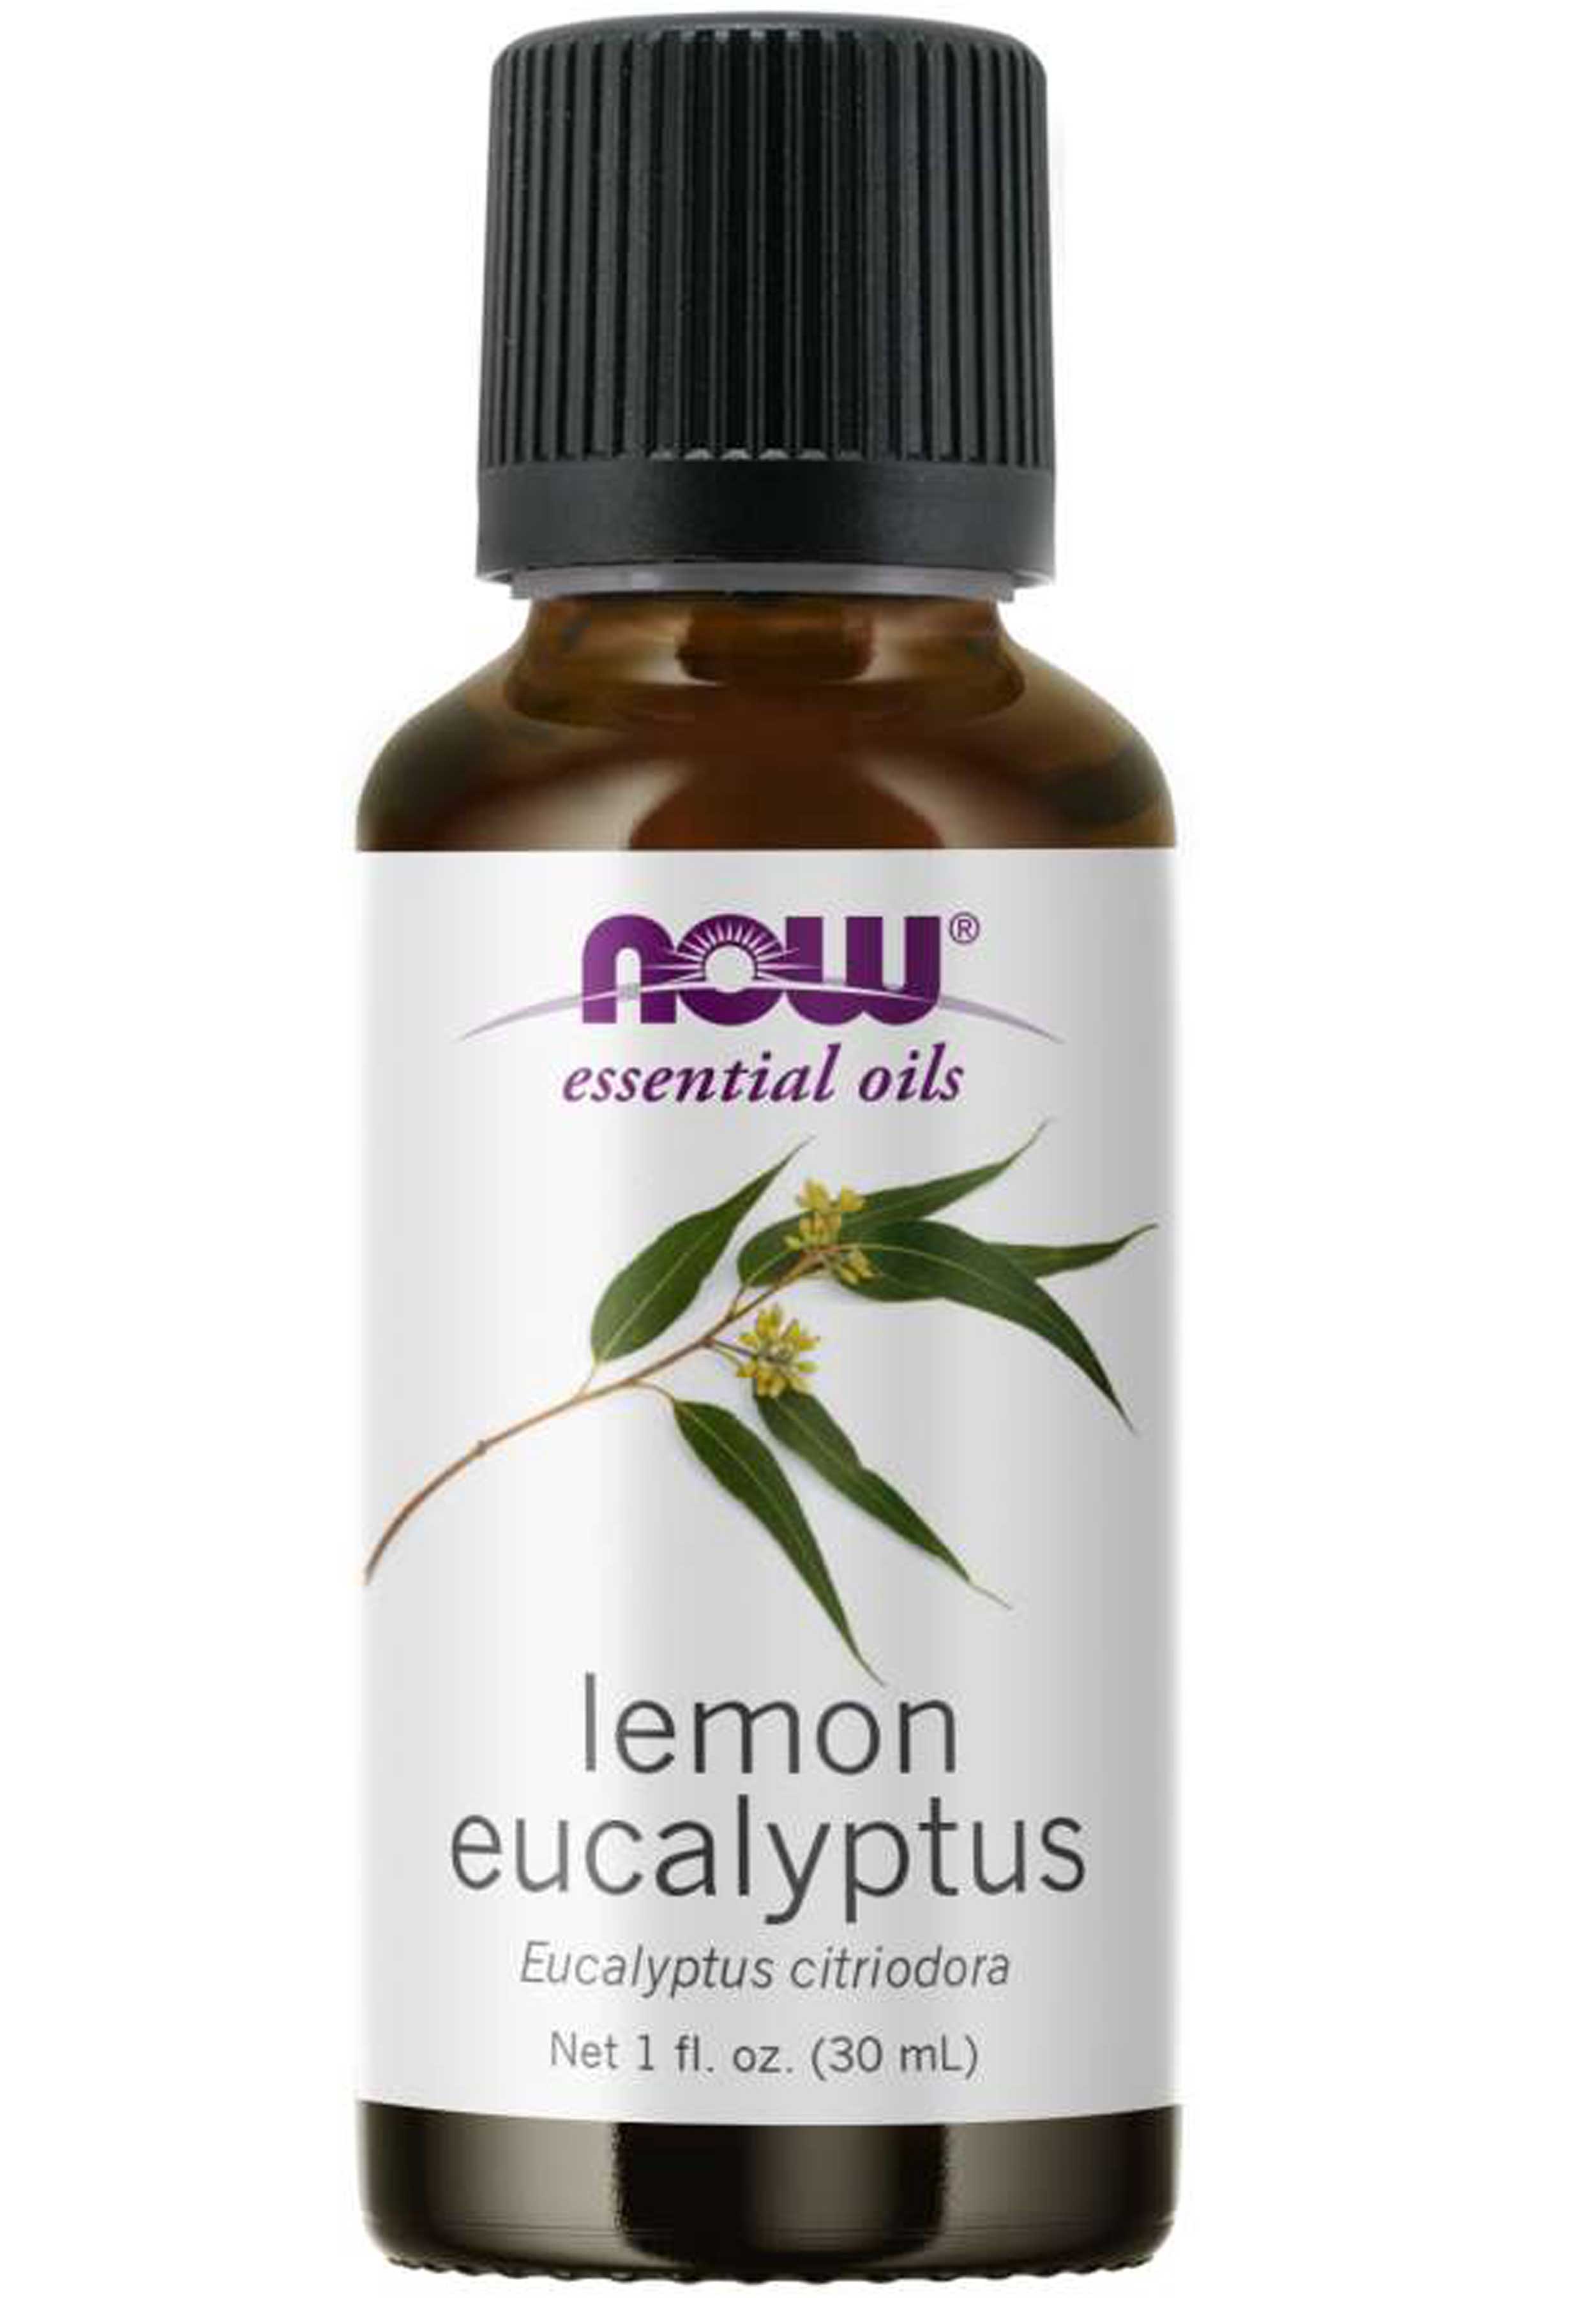 NOW Essential Oils Lemon Eucalyptus Oil